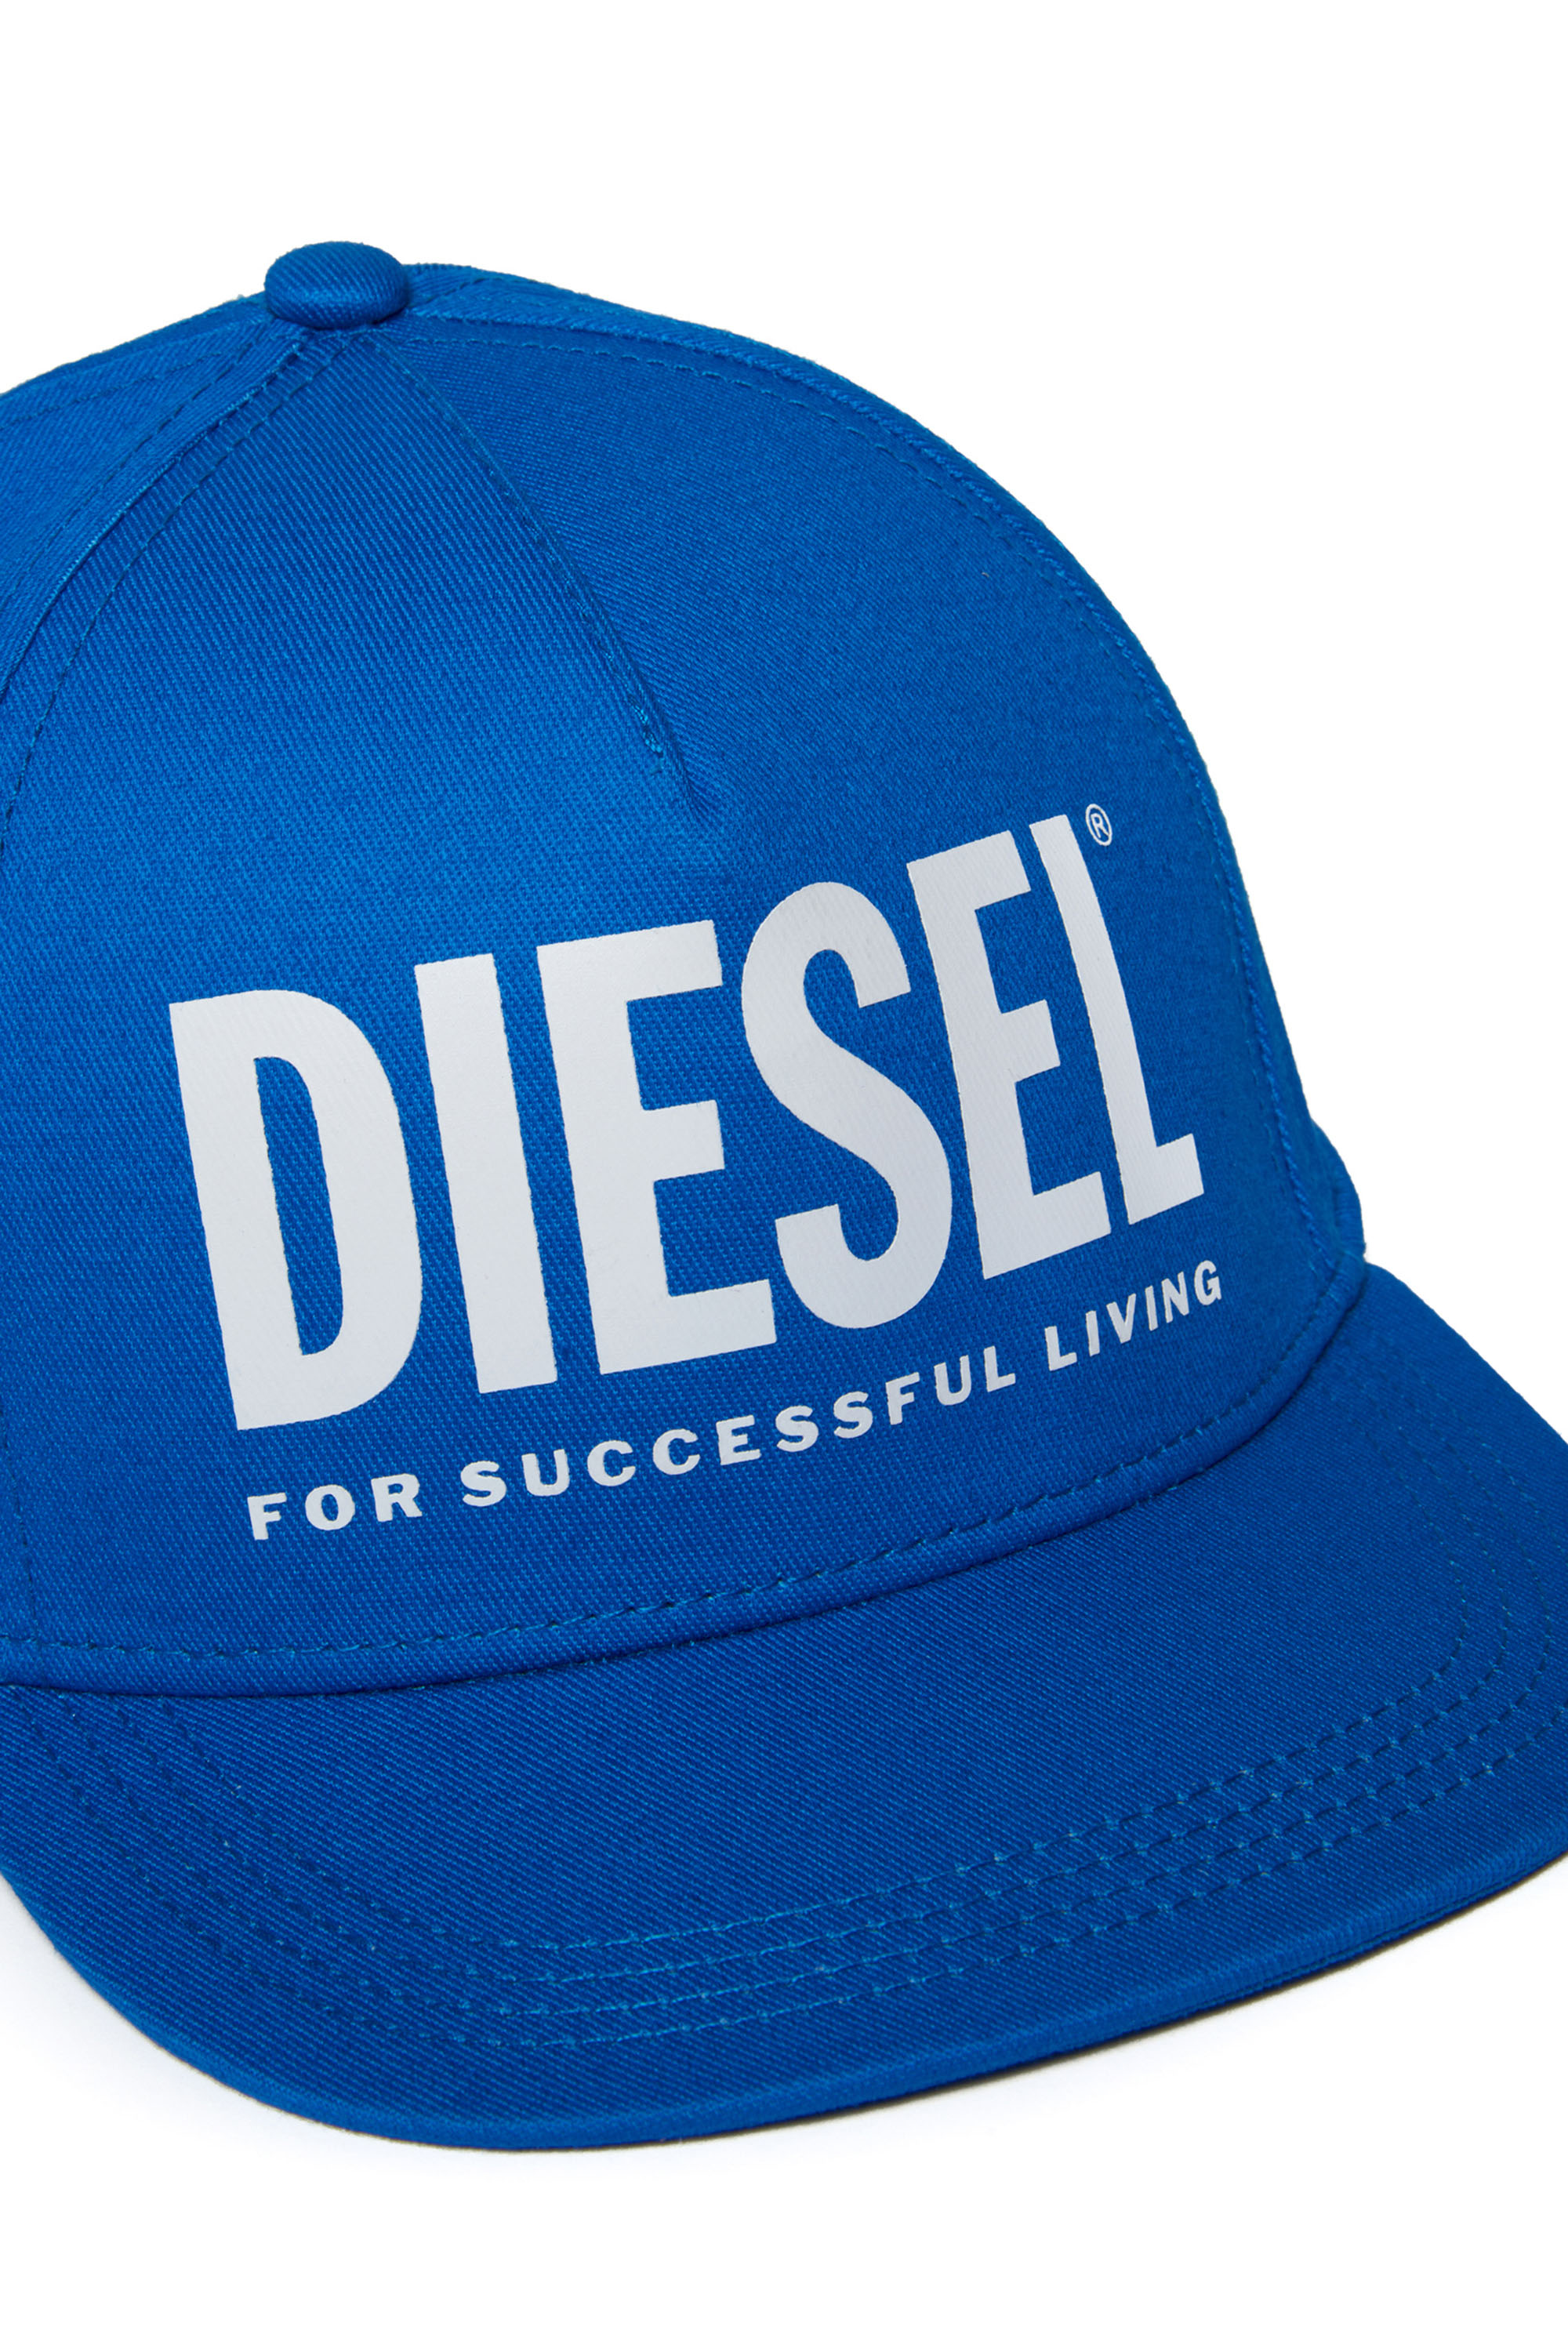 Diesel - FOLLY, Blue - Image 3